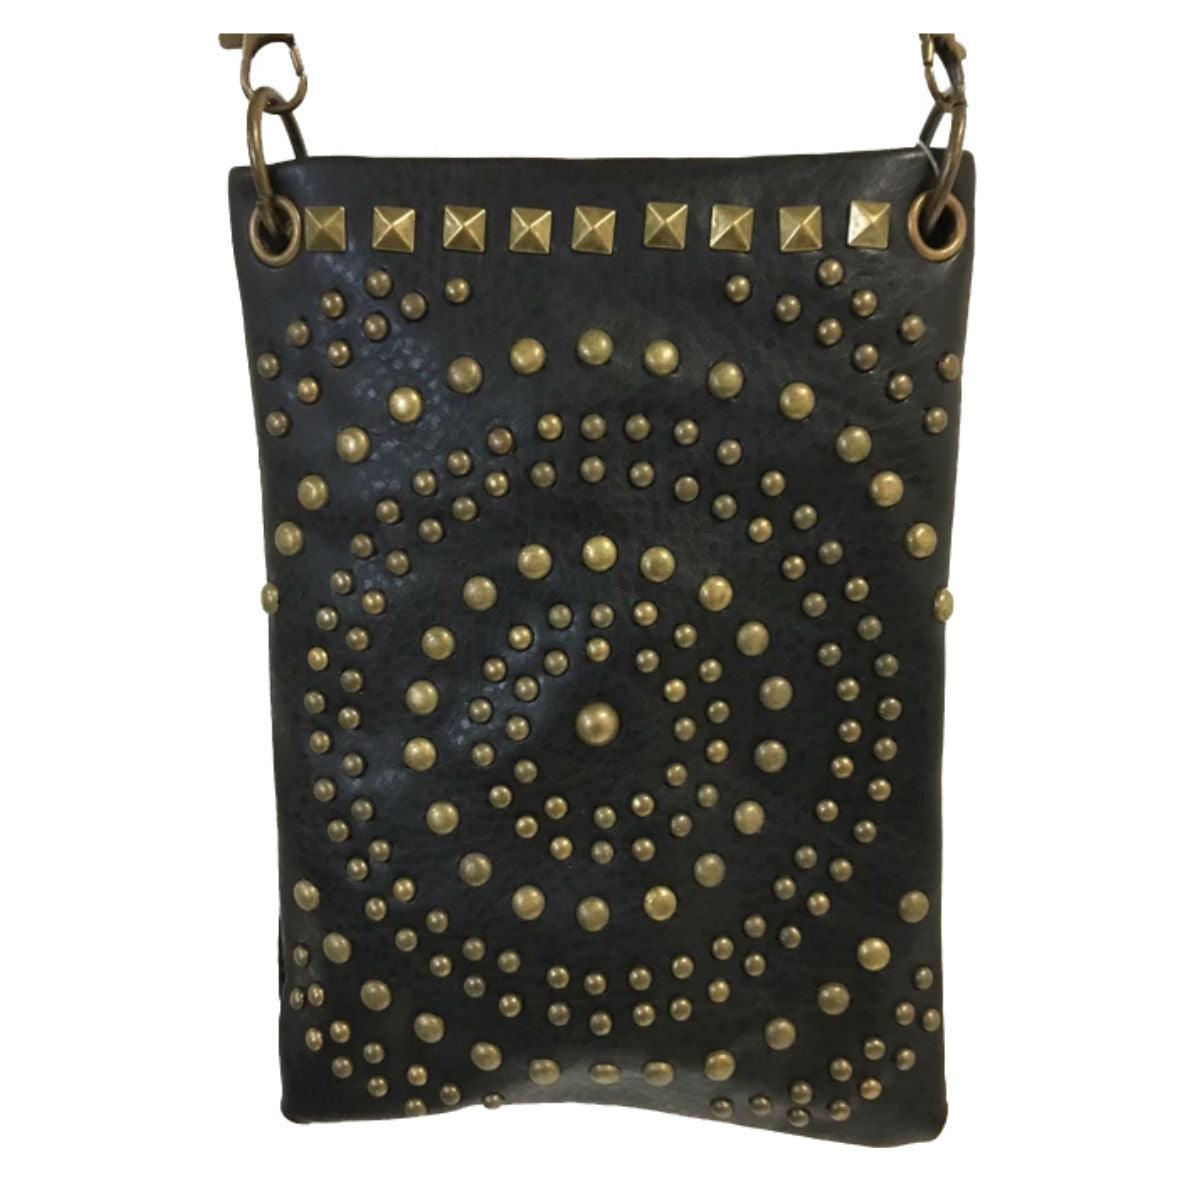 Daniel Smart Women's Crossbody Handbag w/ Antique Bronze Hardware In Circle Design, Black - American Legend Rider